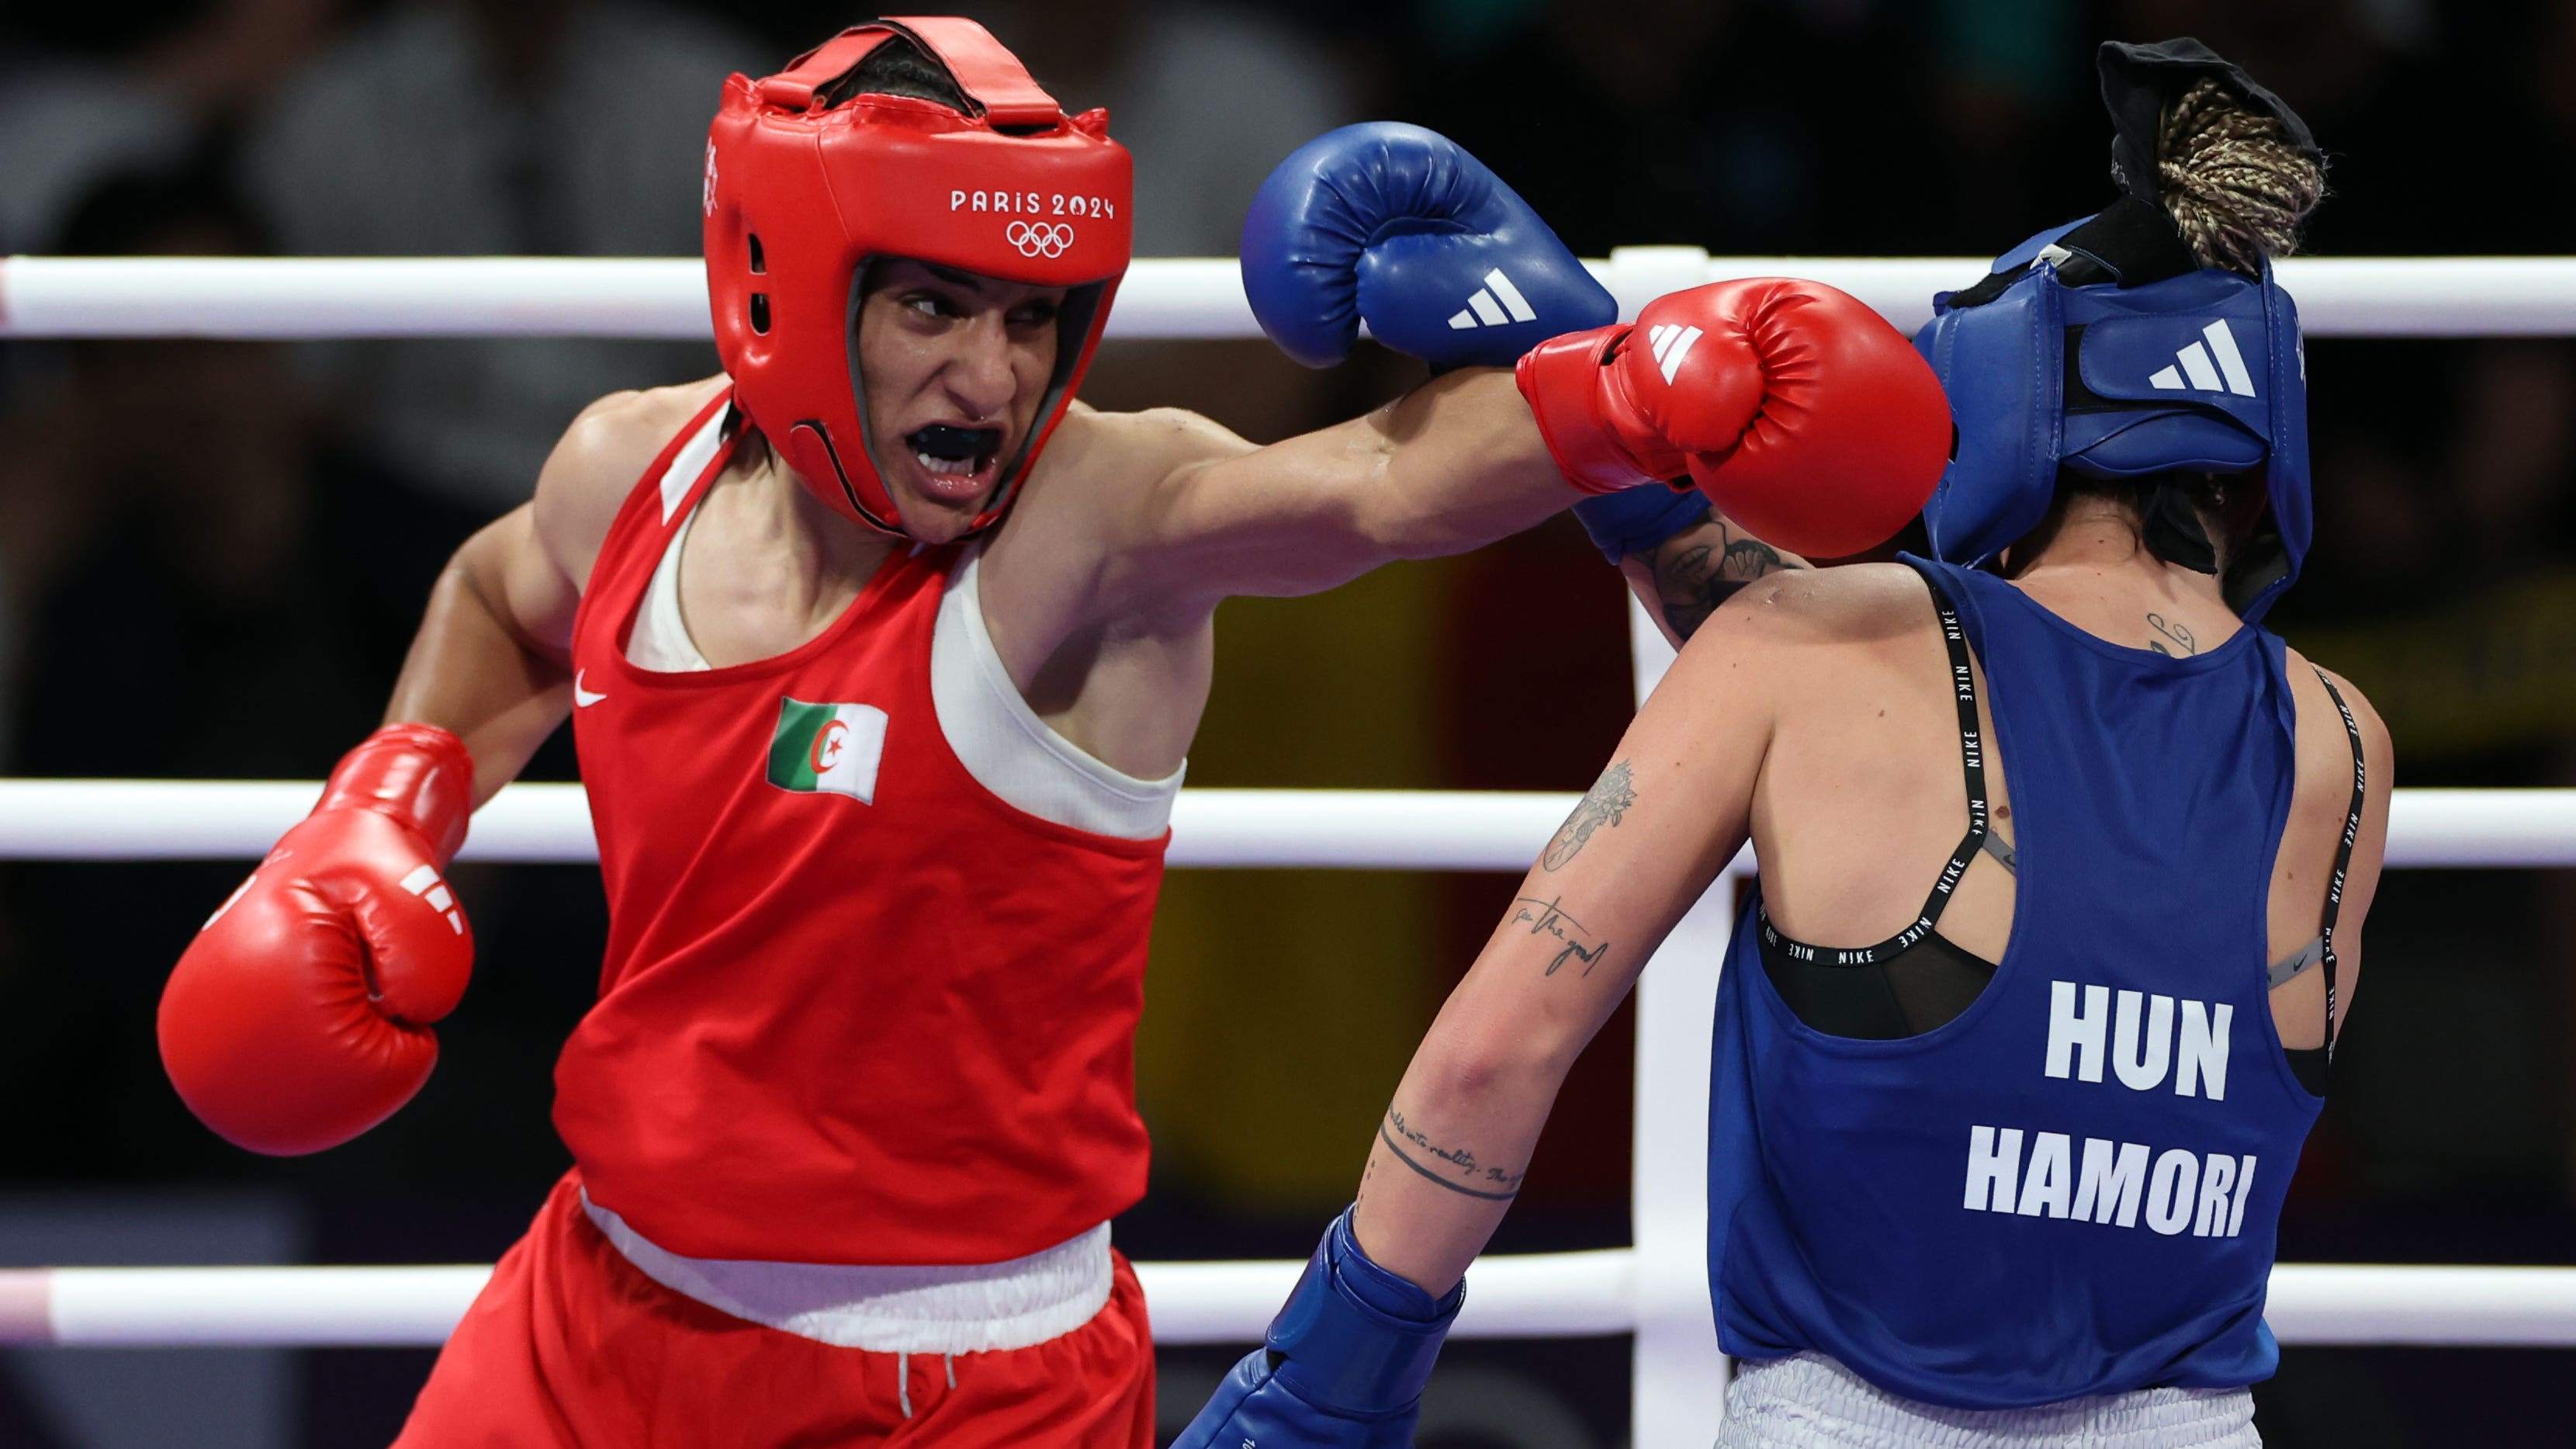 Hungary boxer Anna Luca Hamori ‘proud’ after defeat to Imane Khelif